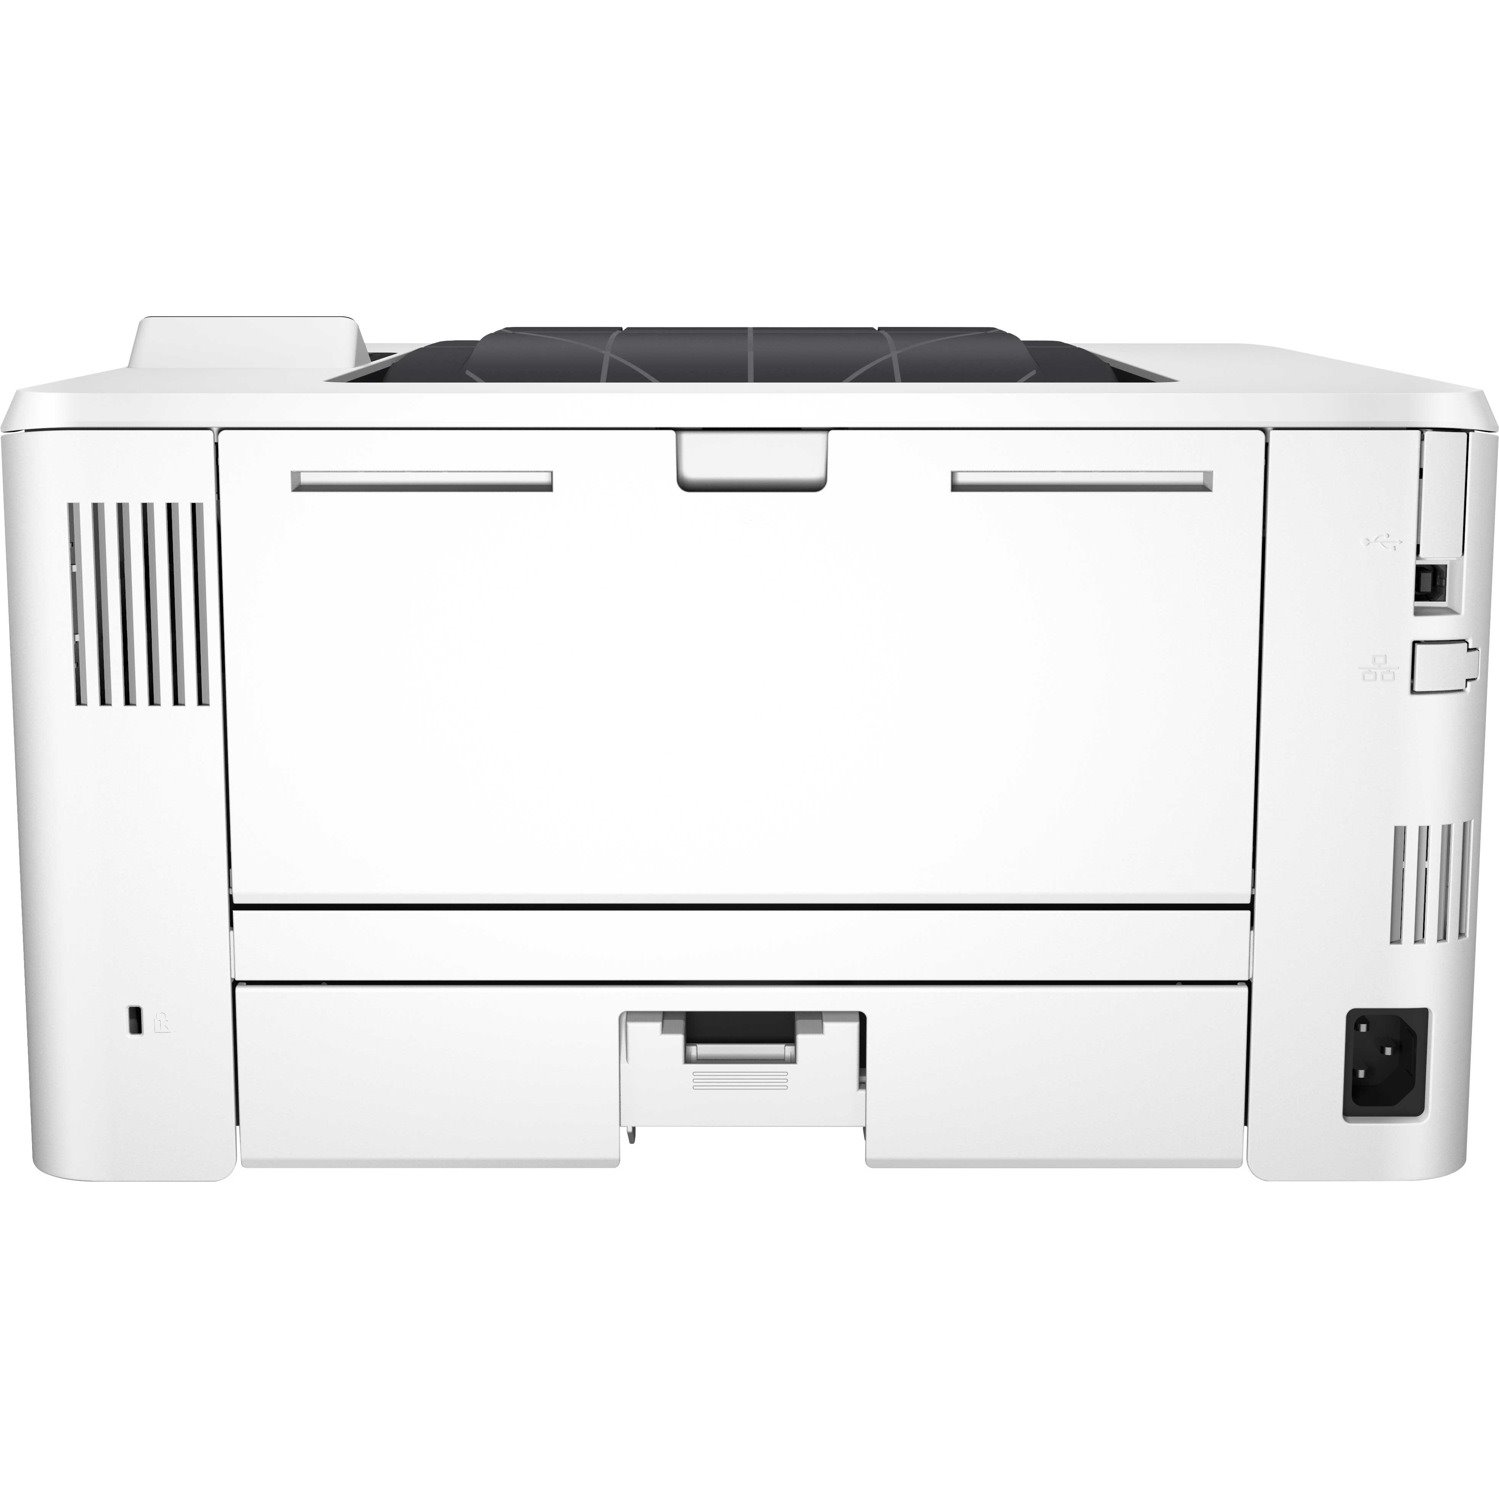 HP LaserJet Pro 400 M402DN Desktop Laser Printer